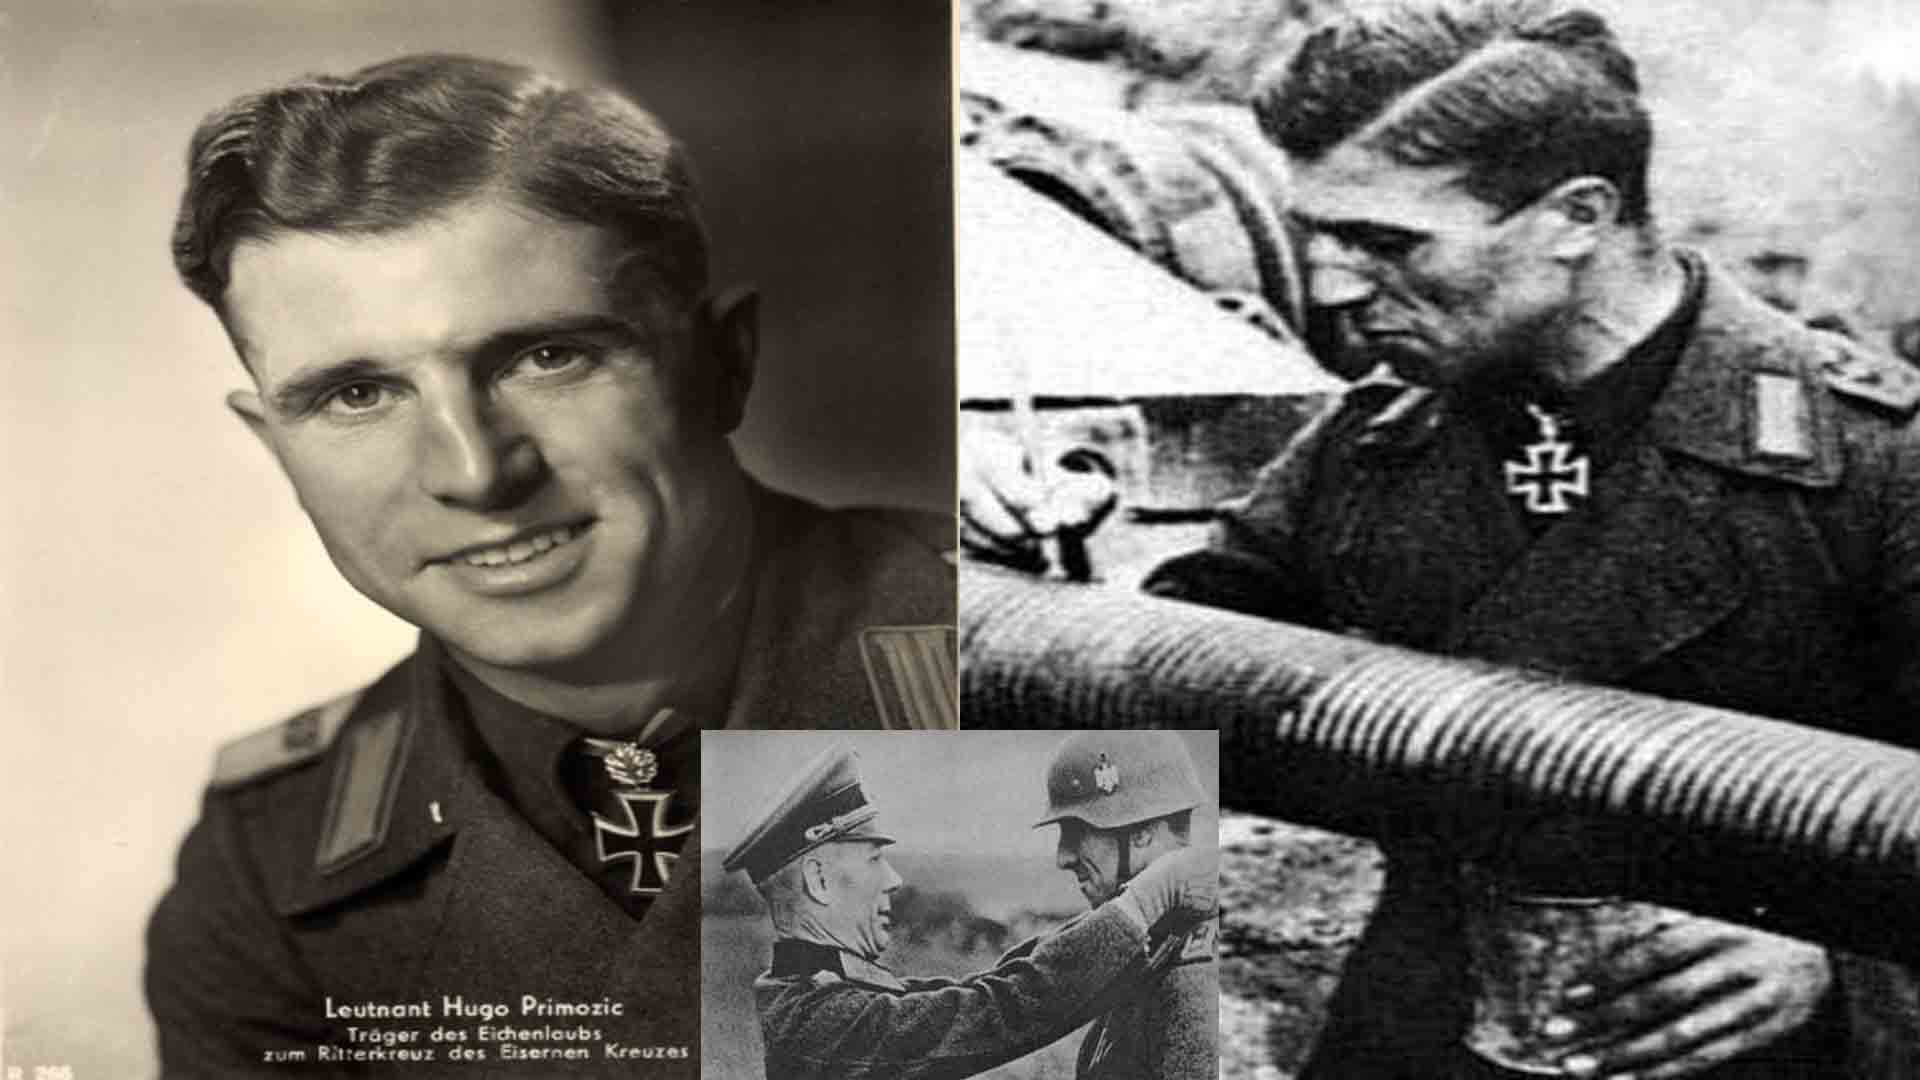 Hugo Primozic, legendary Stug Ace of WWII